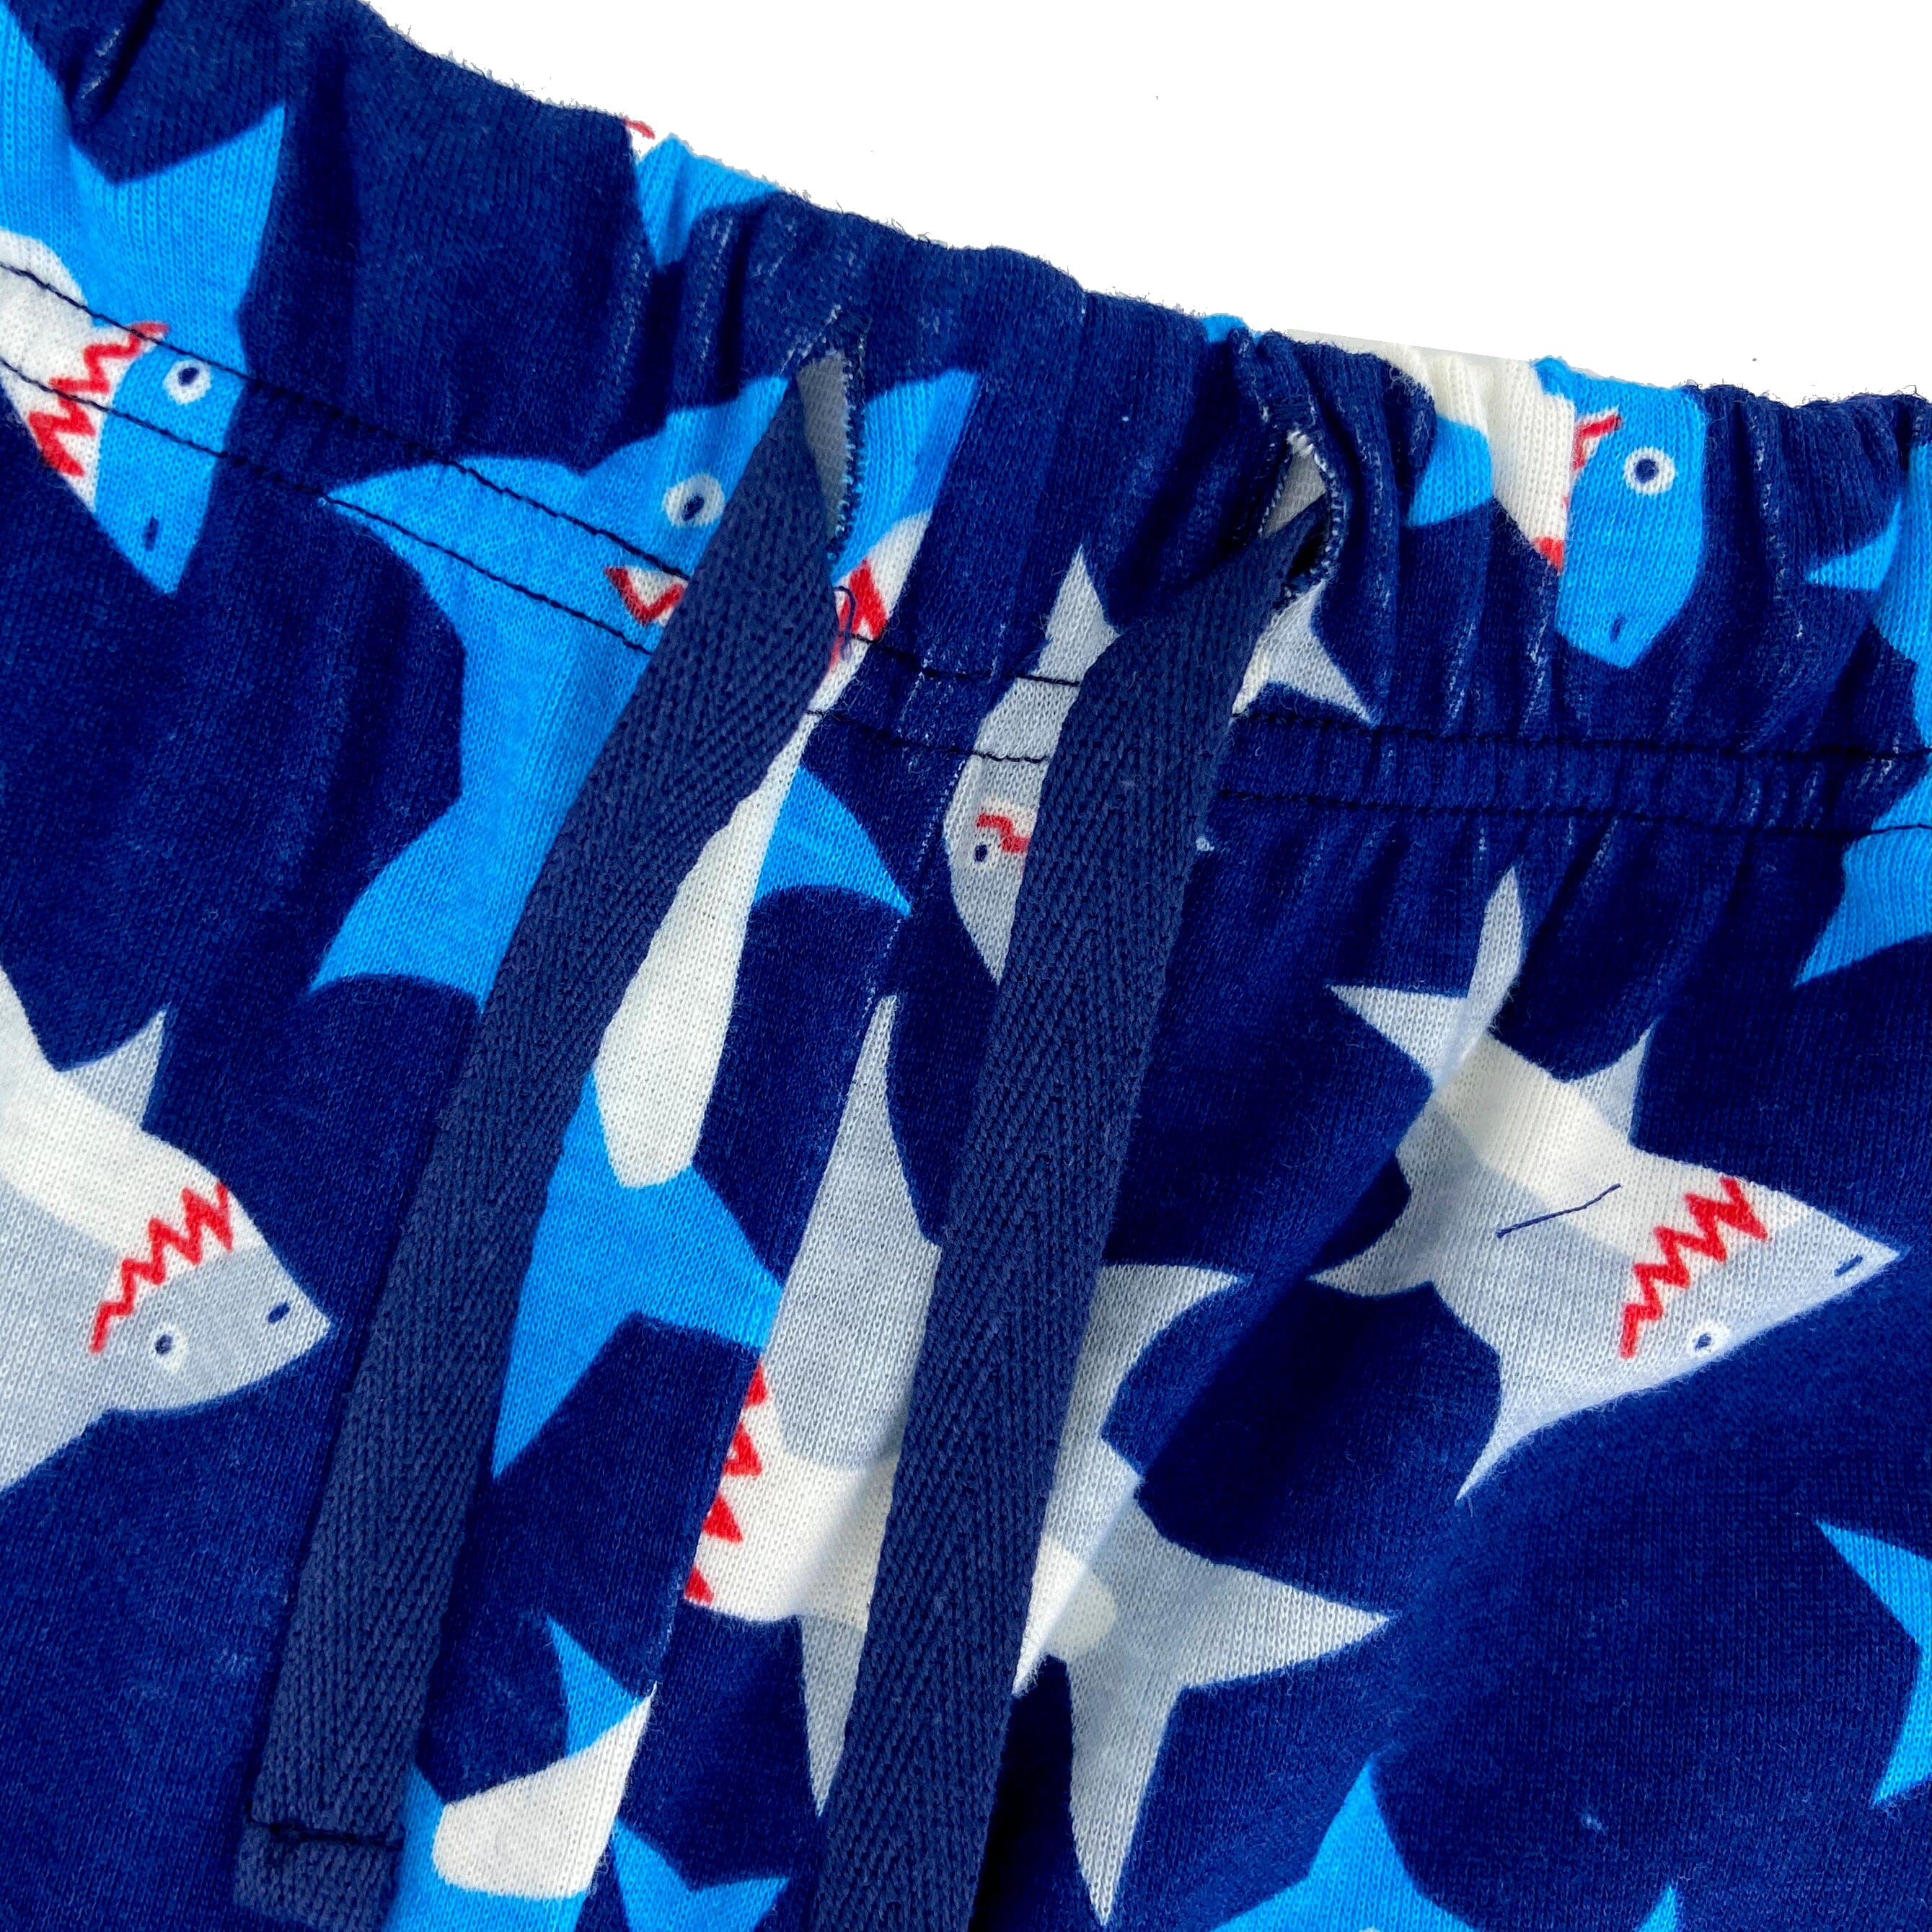 Men's Shark Patterned Soft Comfy Cotton Knit Long Pajama Pant Bottoms